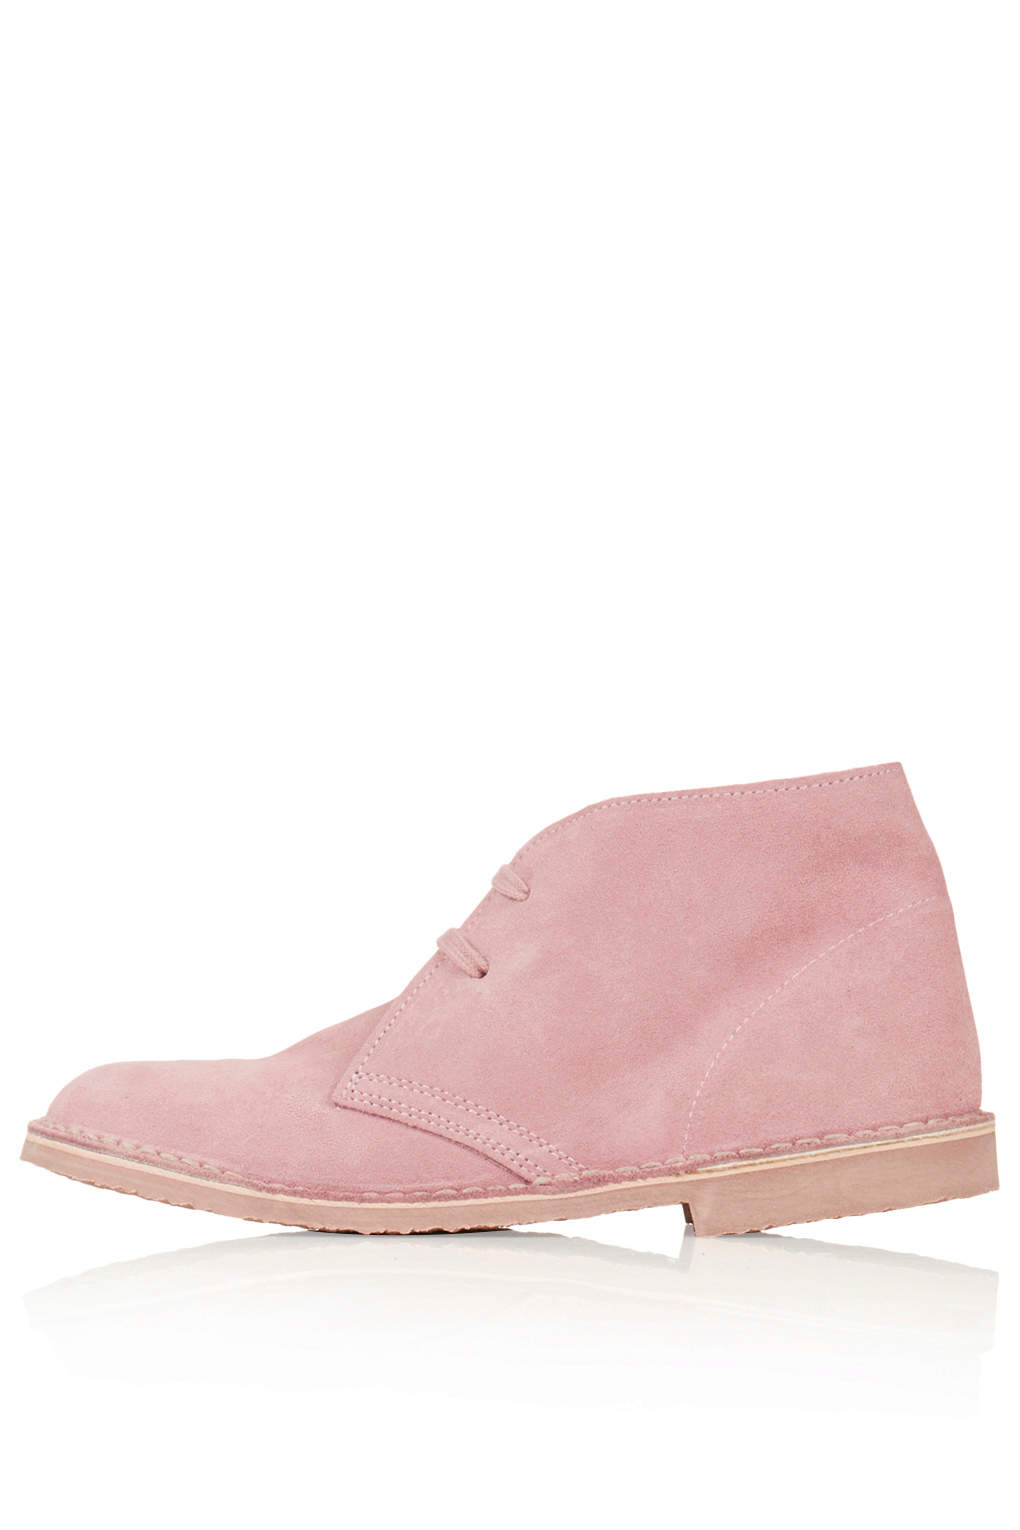 topshop pink boots